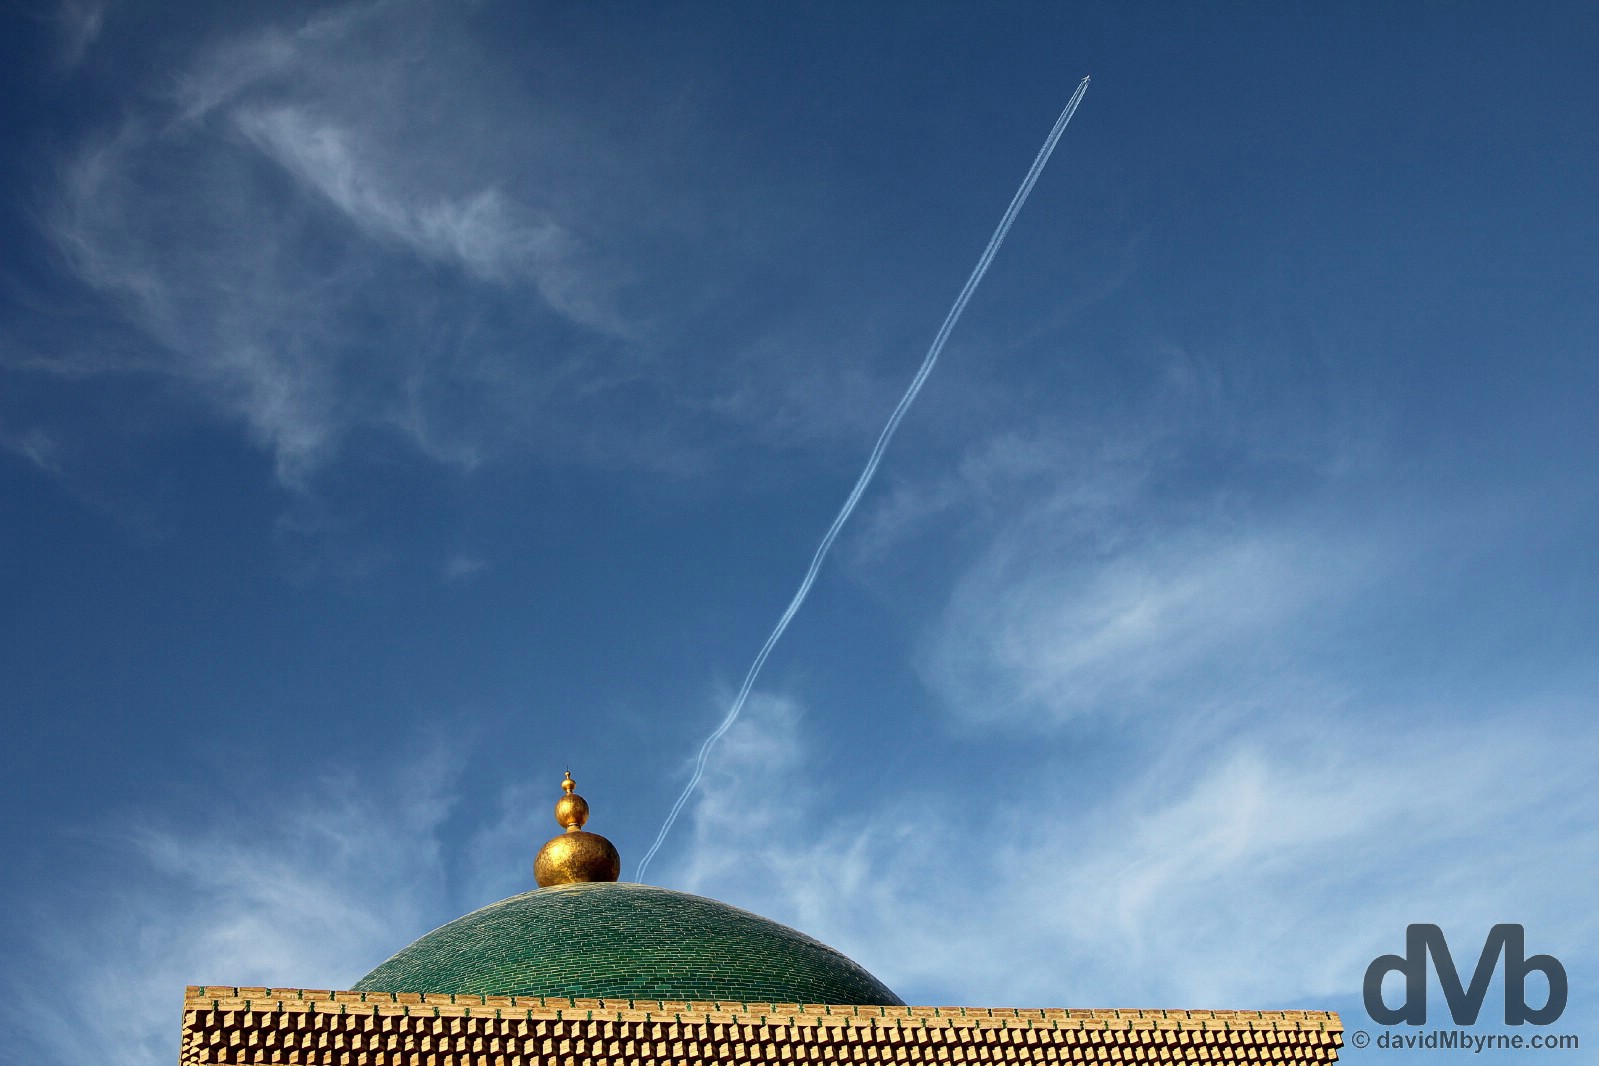 Skies above the Pahlavon Mahmud Mausoleum in Khiva, Uzbekistan. March 14, 2015.